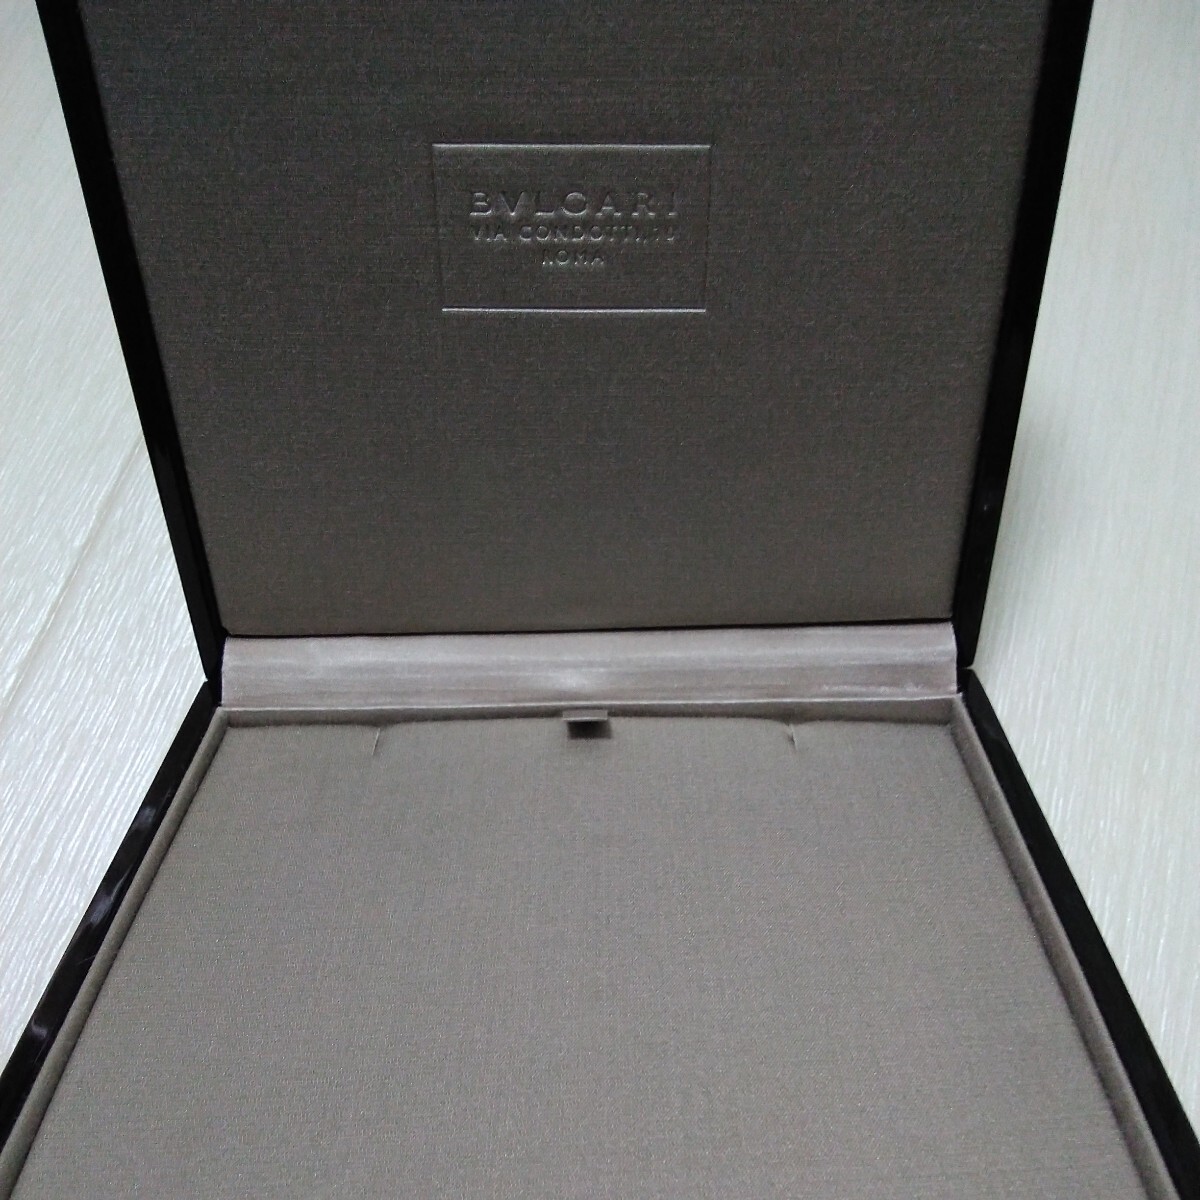  BVLGARY BVLGARI empty box necklace case 